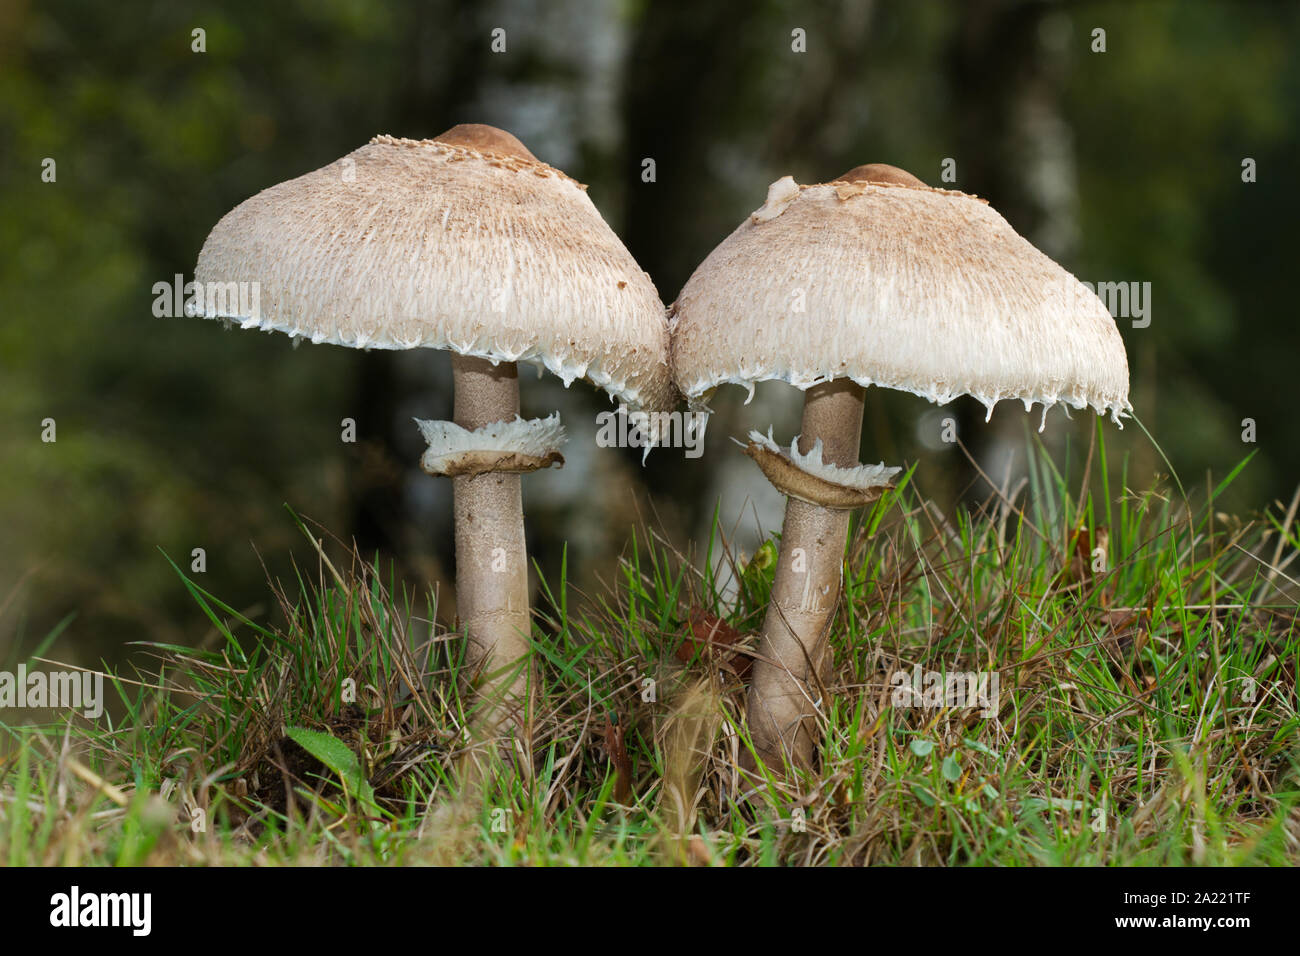 Two mushrooms, probably Shaggy parasols, large white edible mushrooms Stock Photo